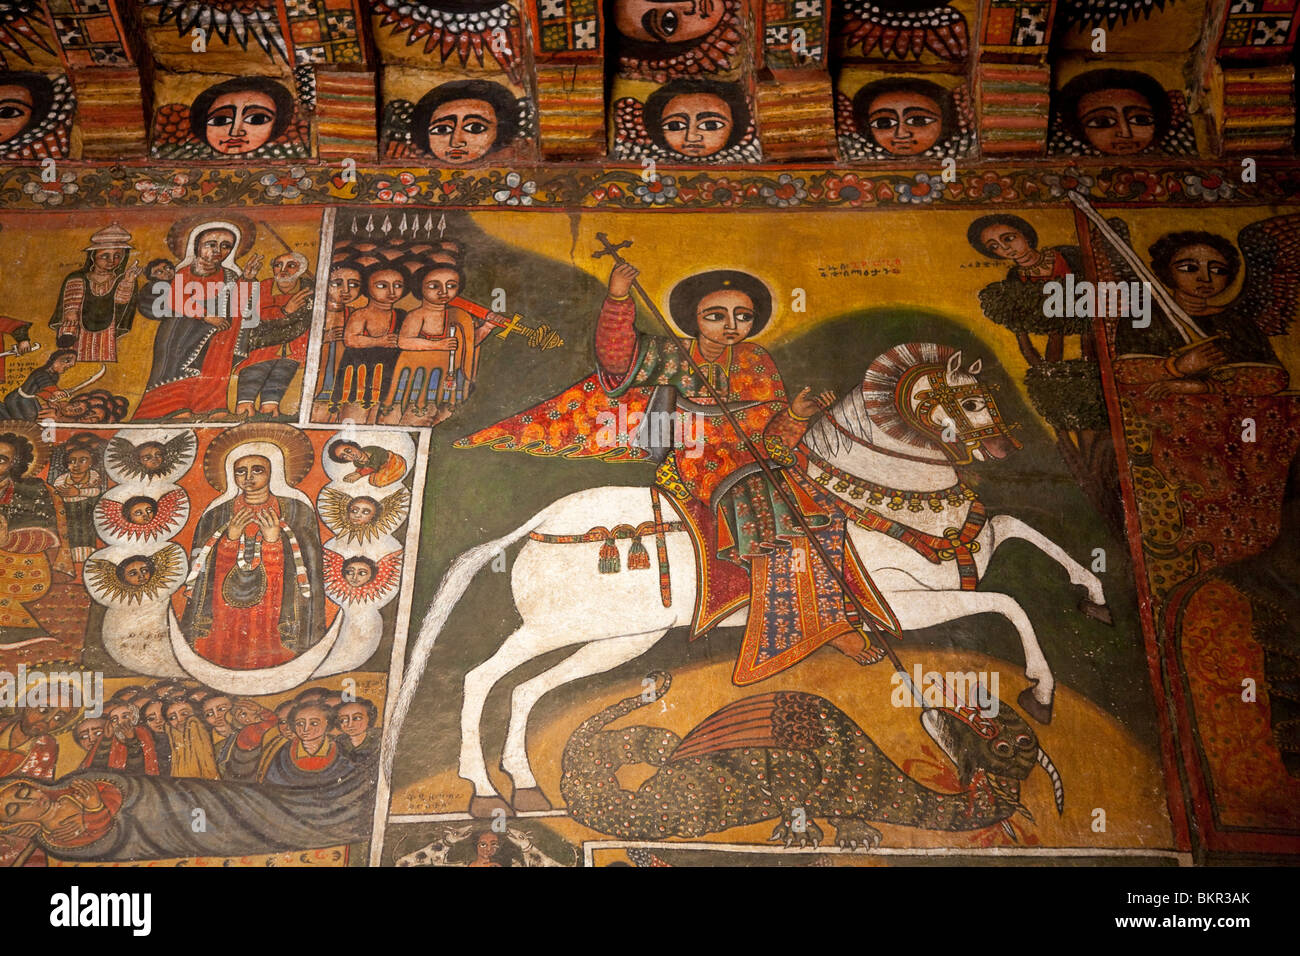 Ethiopia, Gondar, Debre Birhan Selassie Church. Ancient paintings adorn the interior of this famous church. Stock Photo